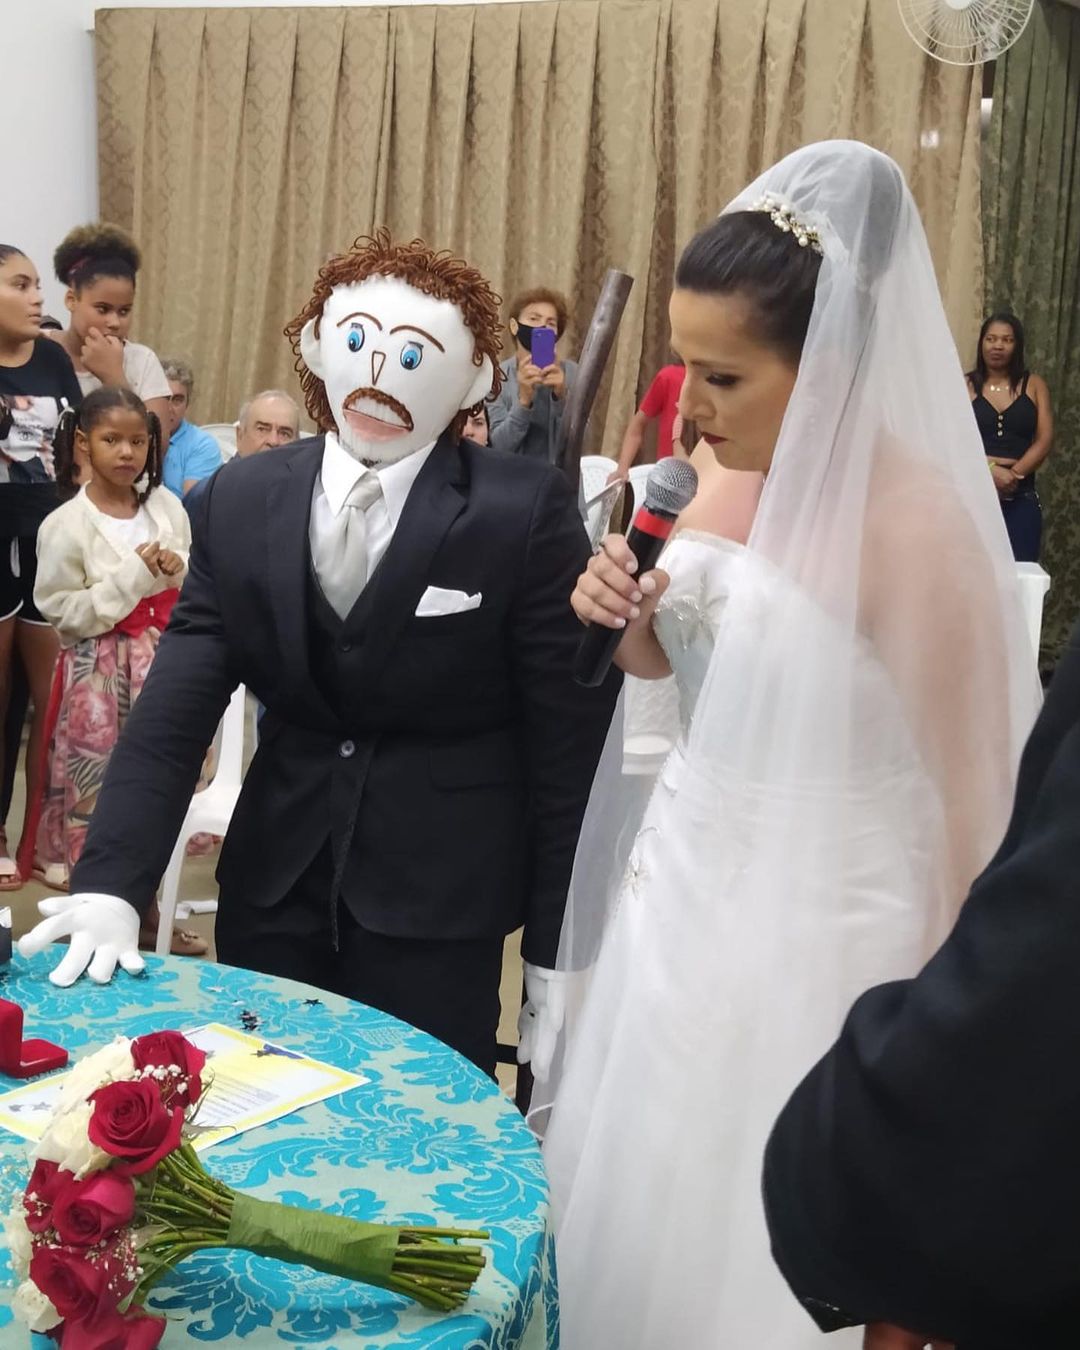 Meirivone Rocha Moraes with her Rag Doll husband, Marcelo, during their wedding ceremony